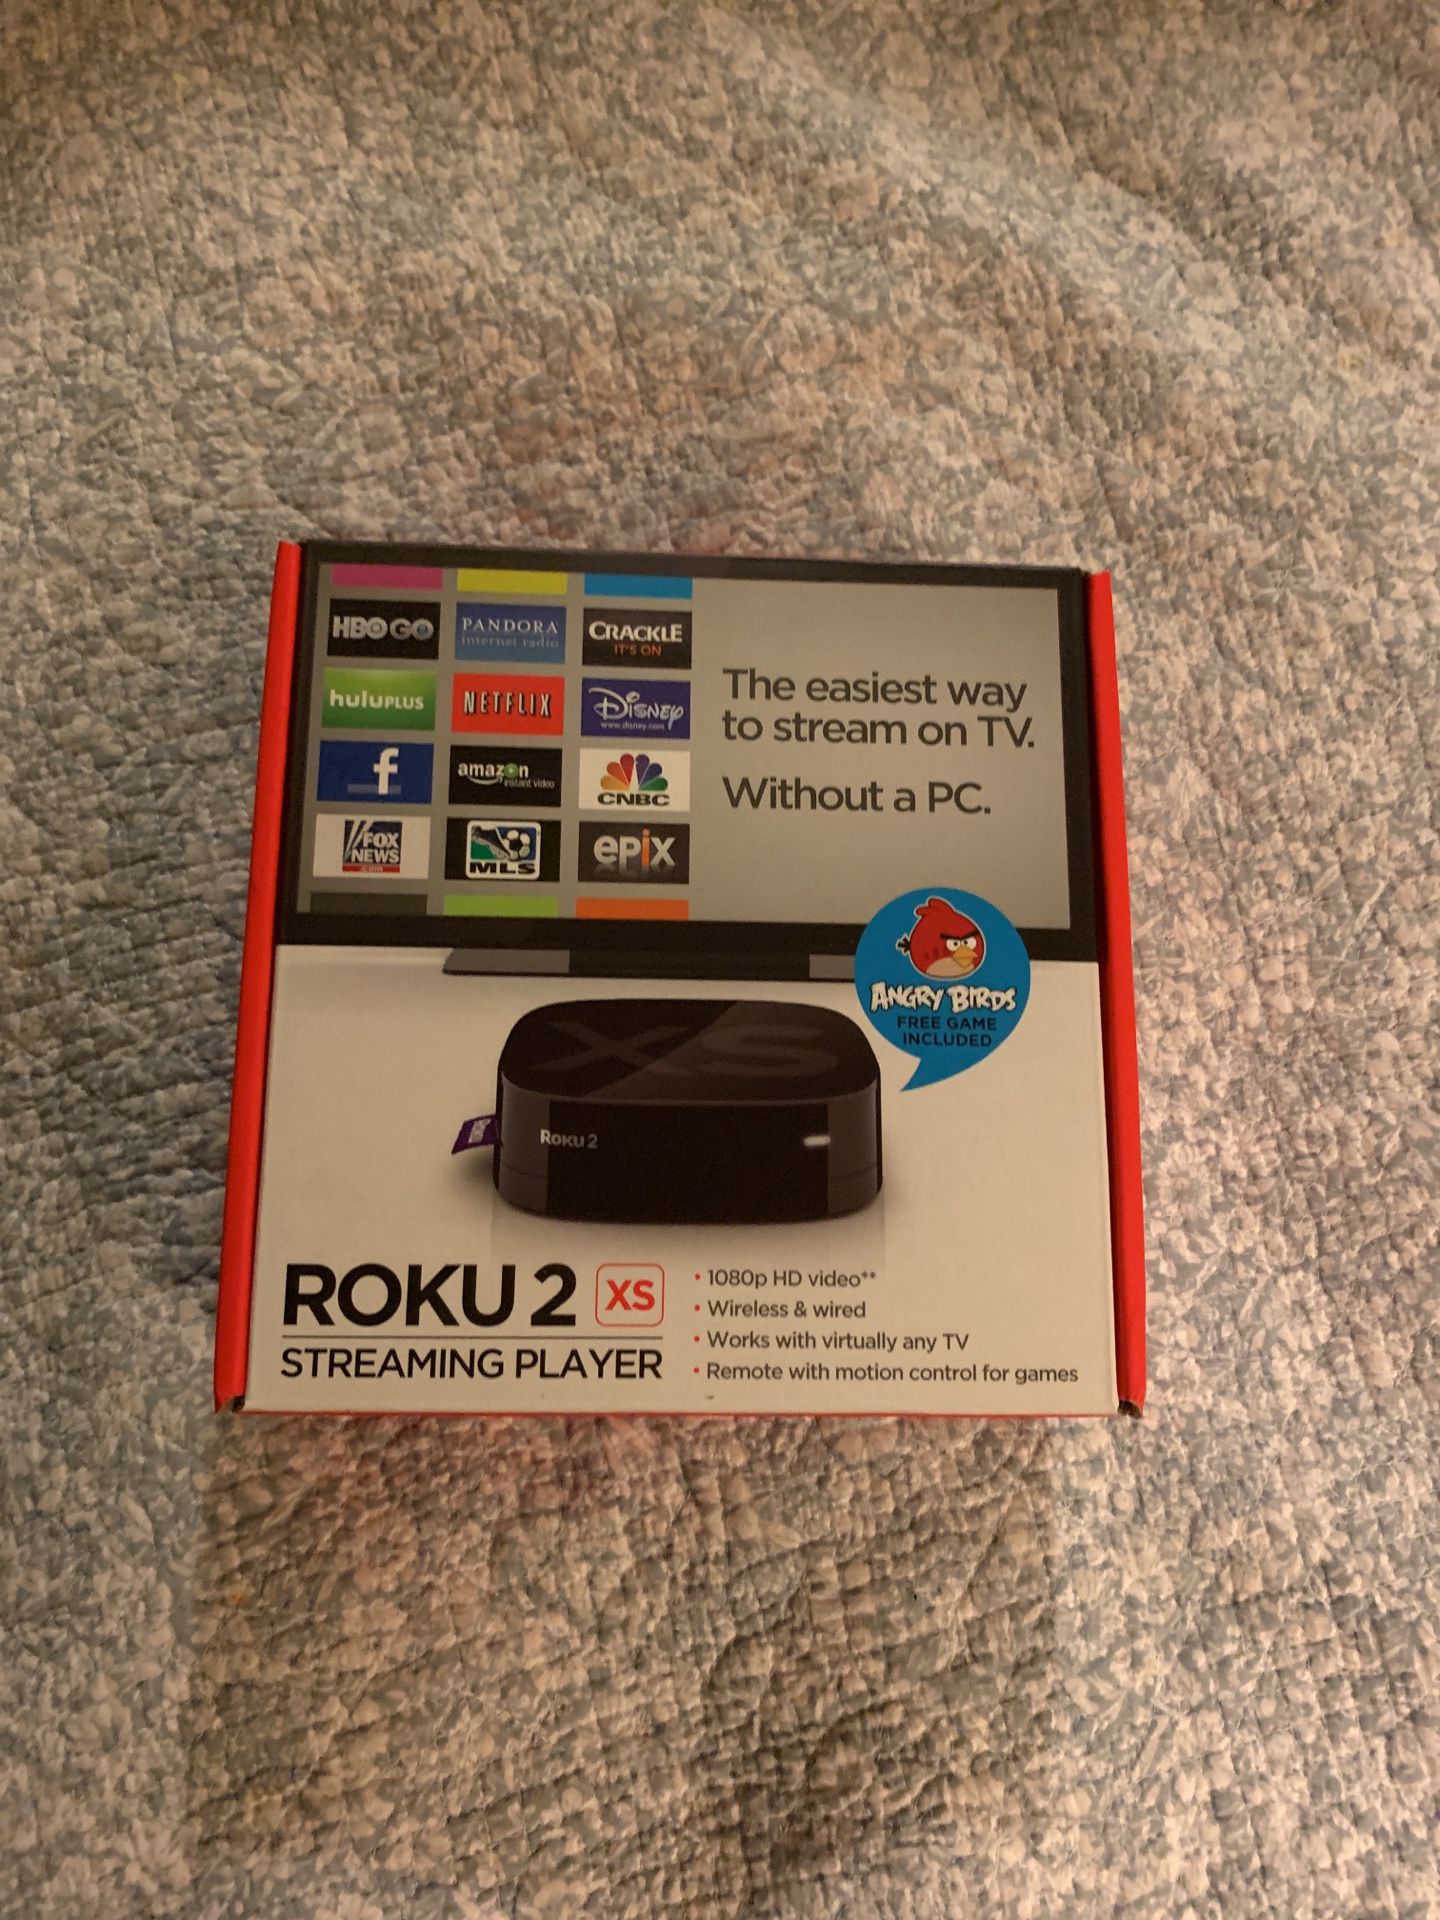 Roku 2 xs streaming player